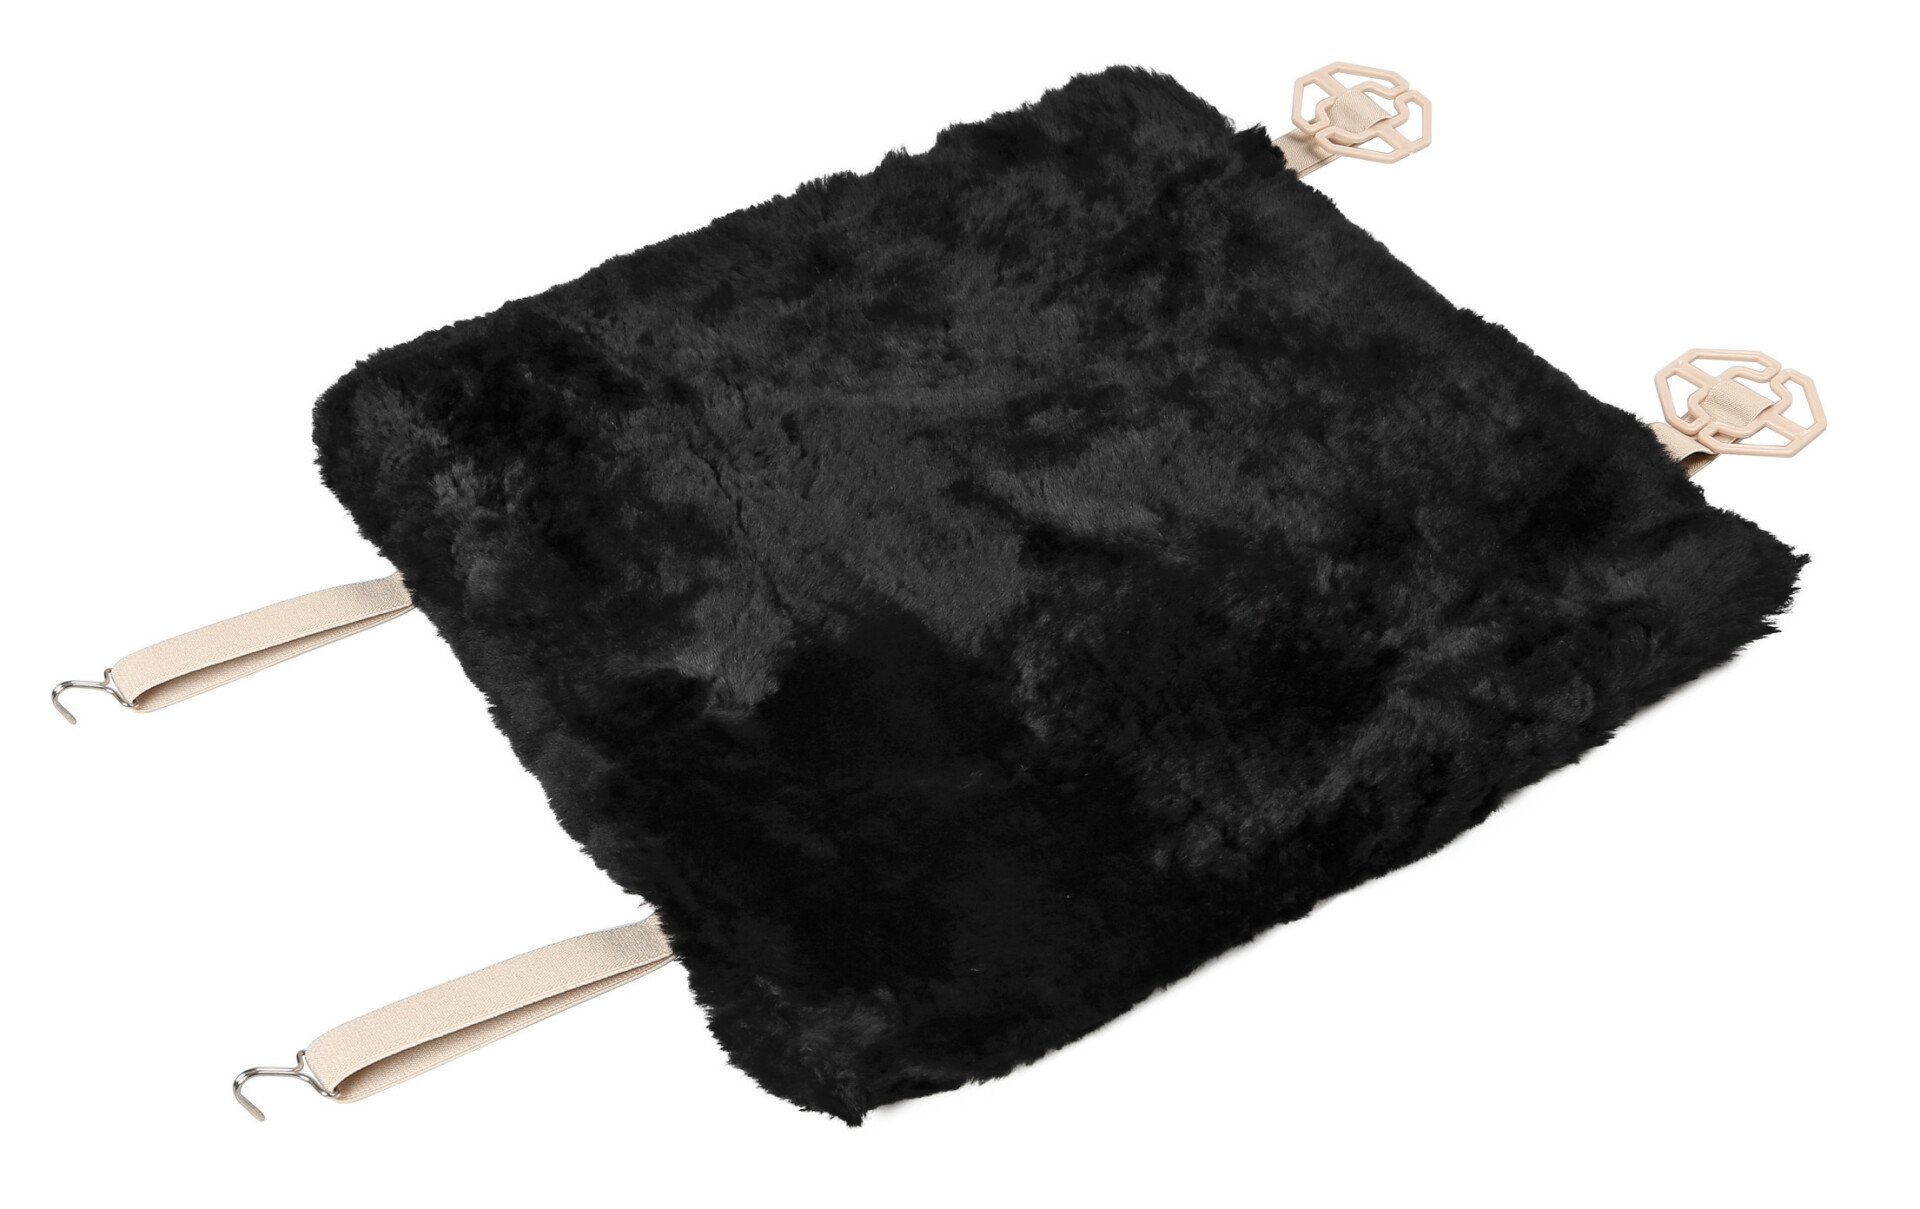 Comfort Max, sheepskin seat cushion 1pcs - Black thumb